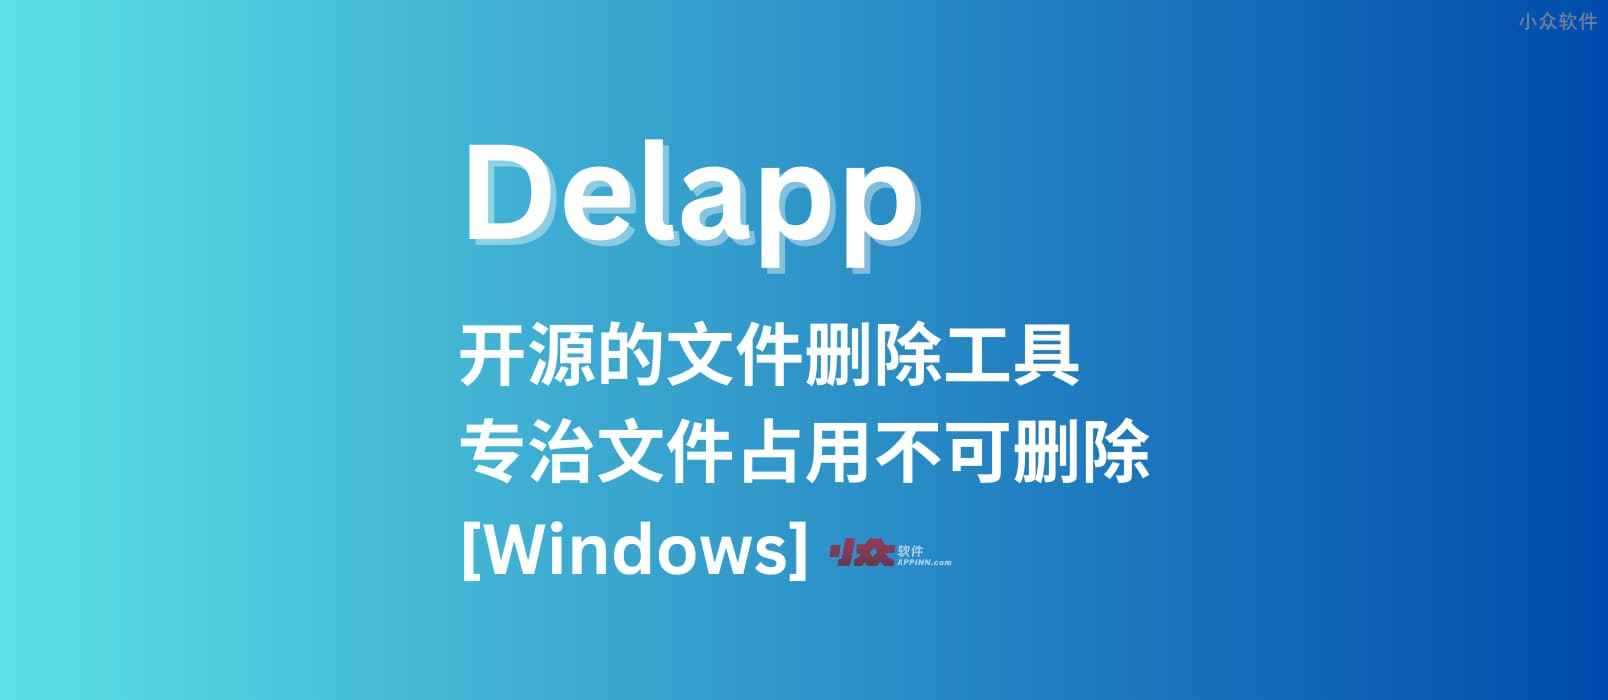 Delapp – 开源的文件删除工具，专治文件占用不可删除[Windows]开发者「瞎扯八道」写的好